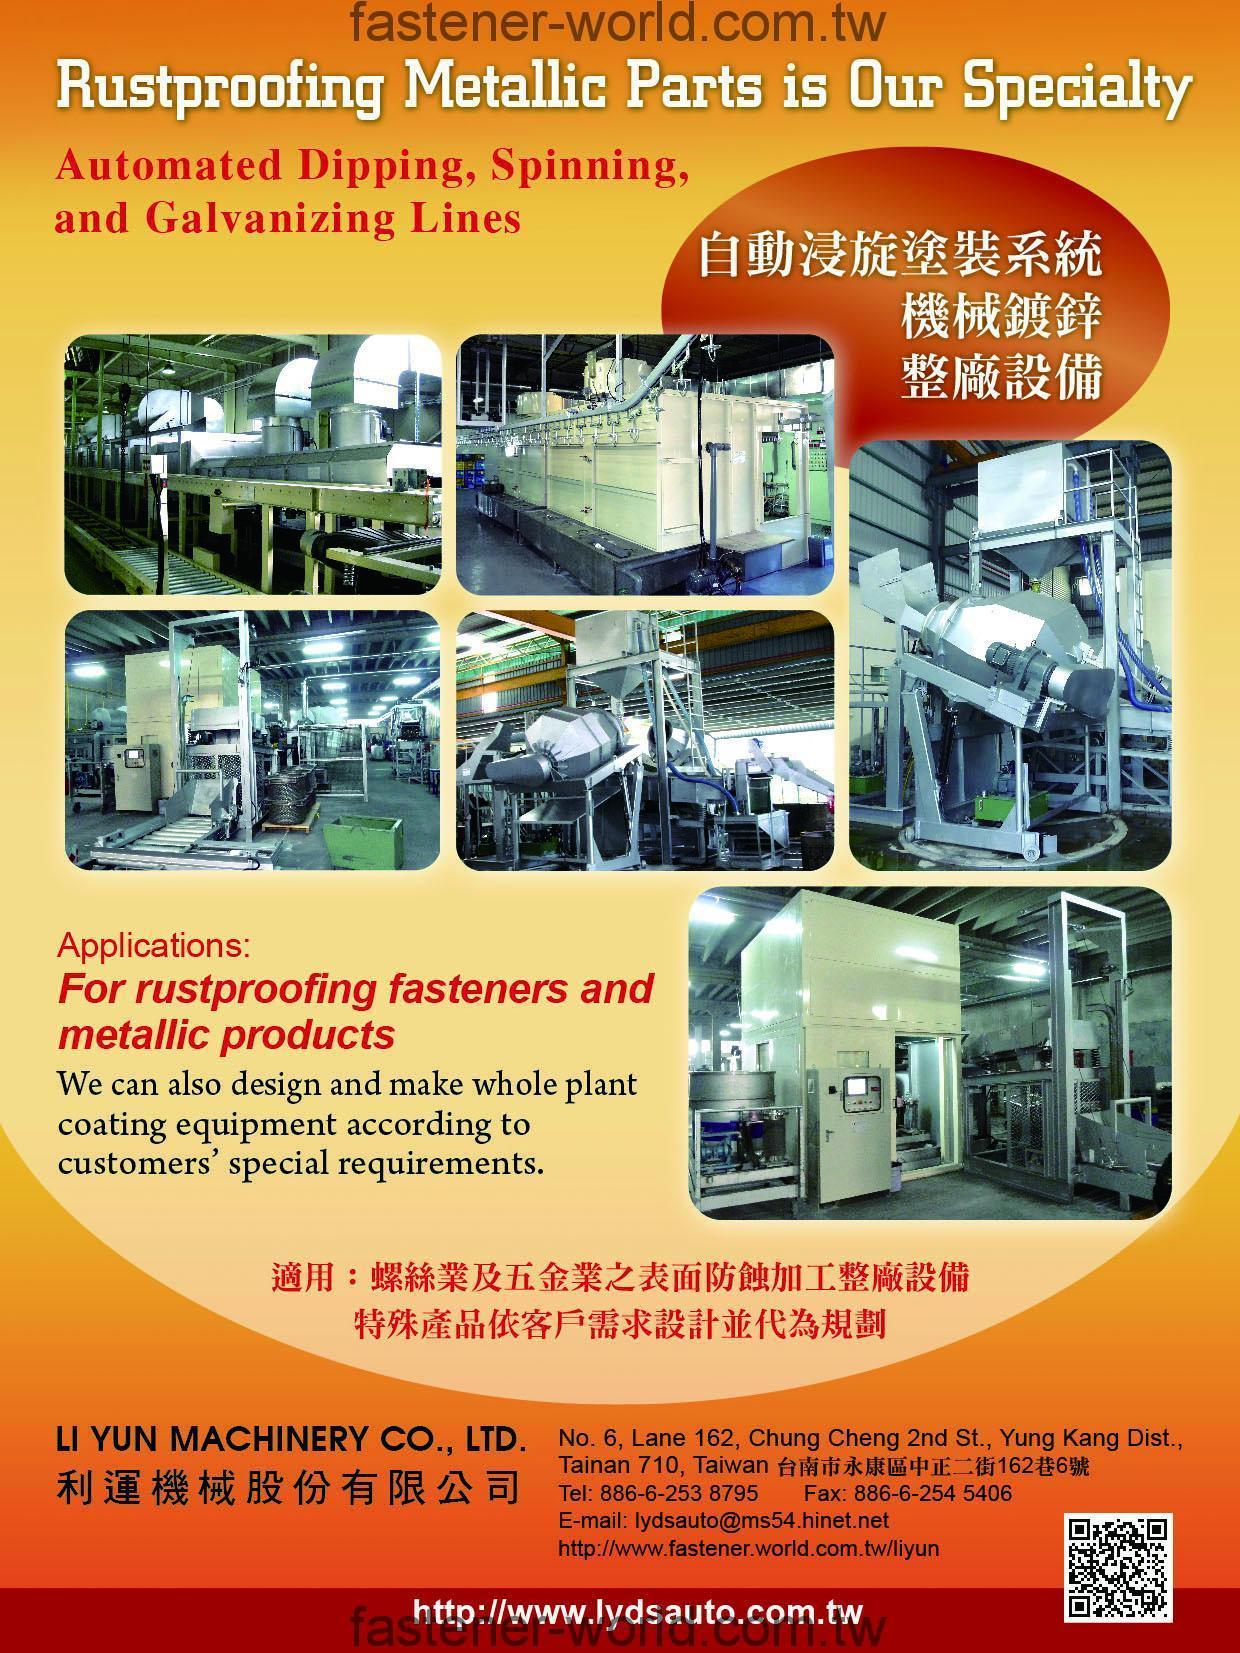 LI YUN MACHINERY CO., LTD._Online Catalogues